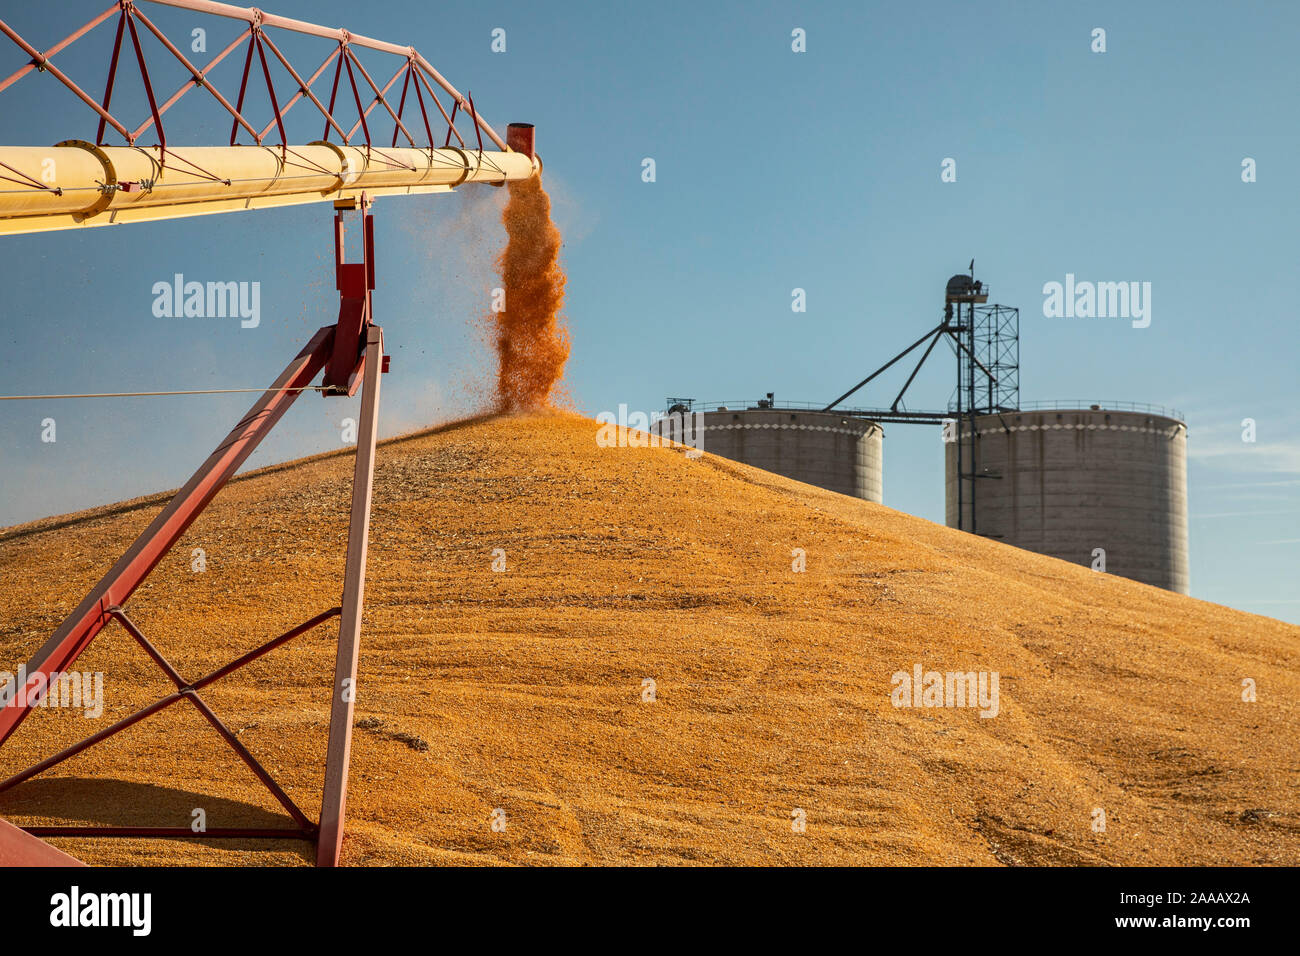 Daykin, Nebraska - Corn is stored temporarily on the ground outside a grain elevator. Stock Photo